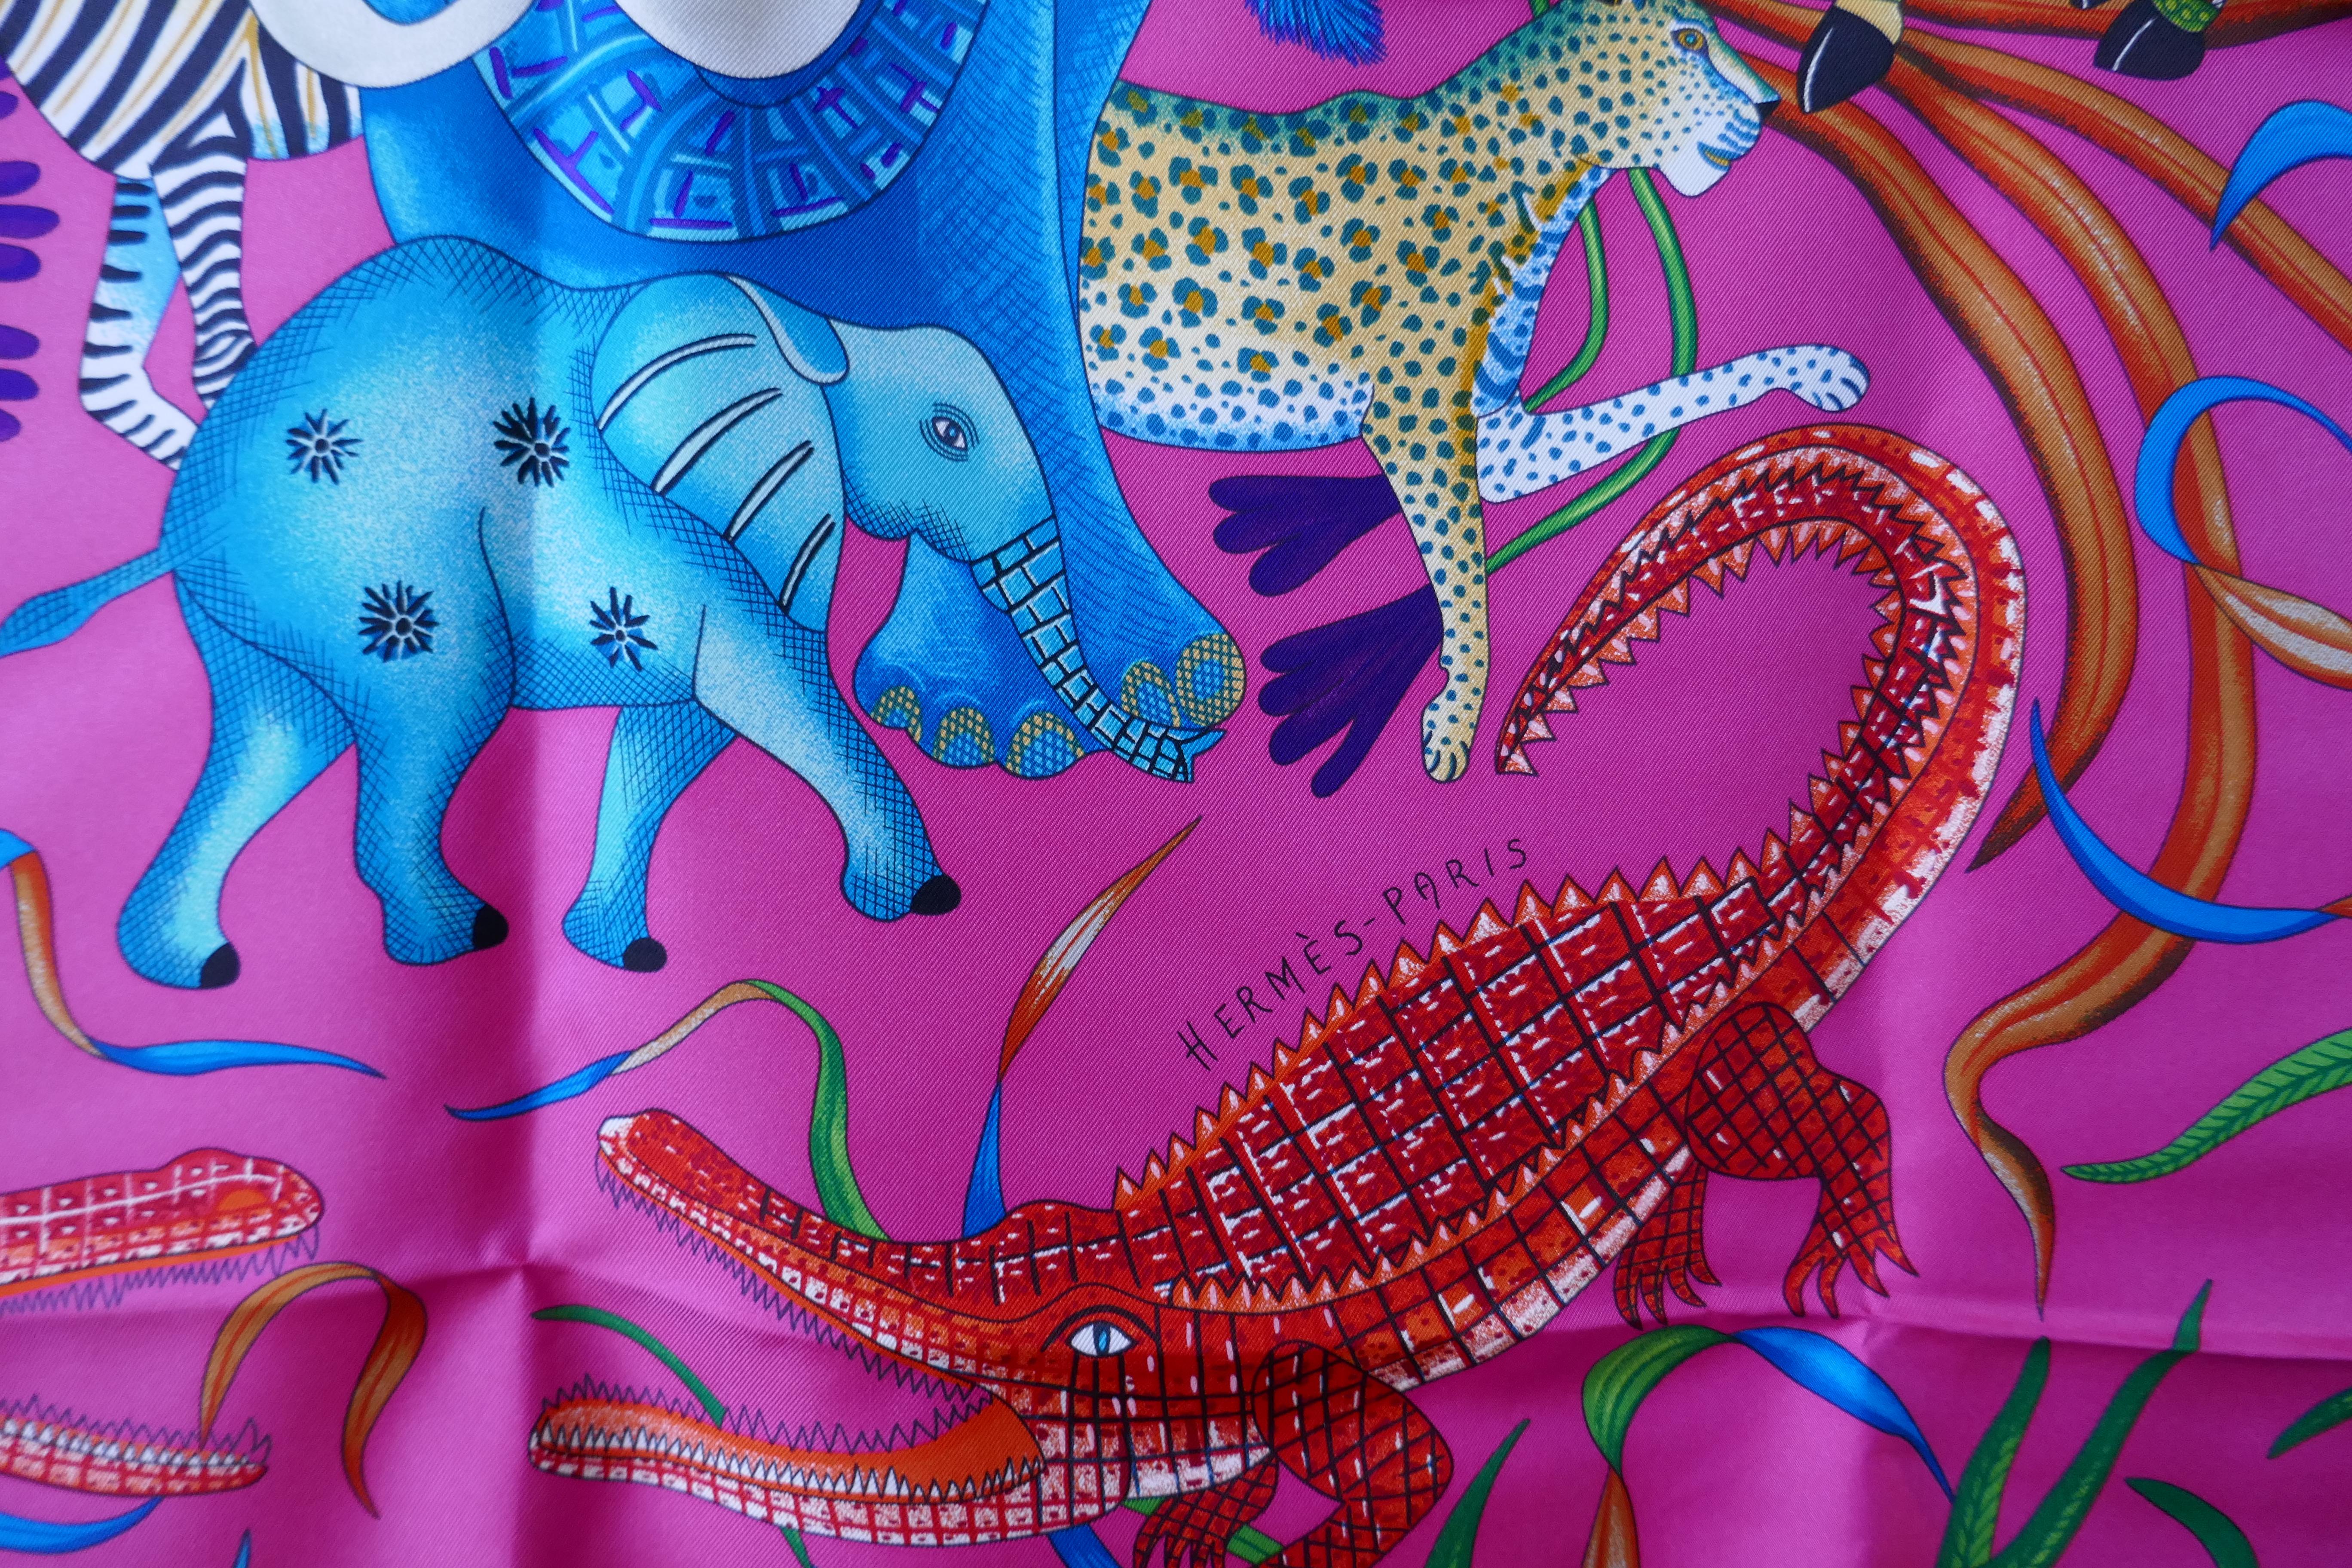 HERMÈS Ardmore Artists design “La Marche du Zambeze” 100% Silk Scarf,  2